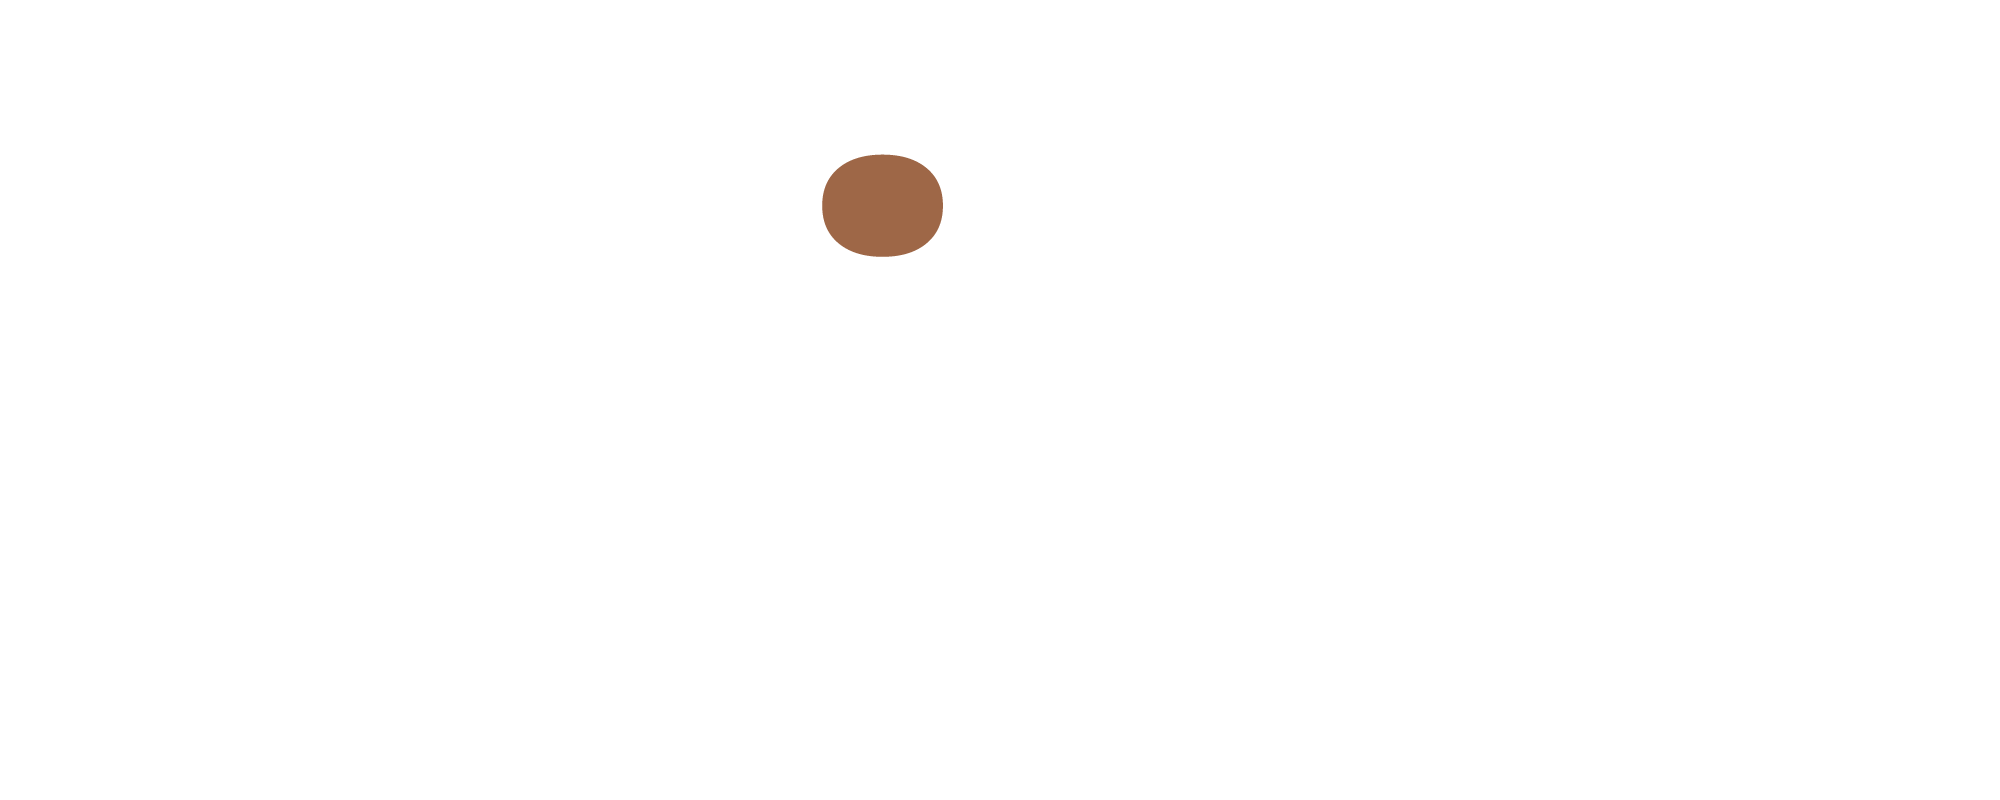 The Cybersecurity Studio